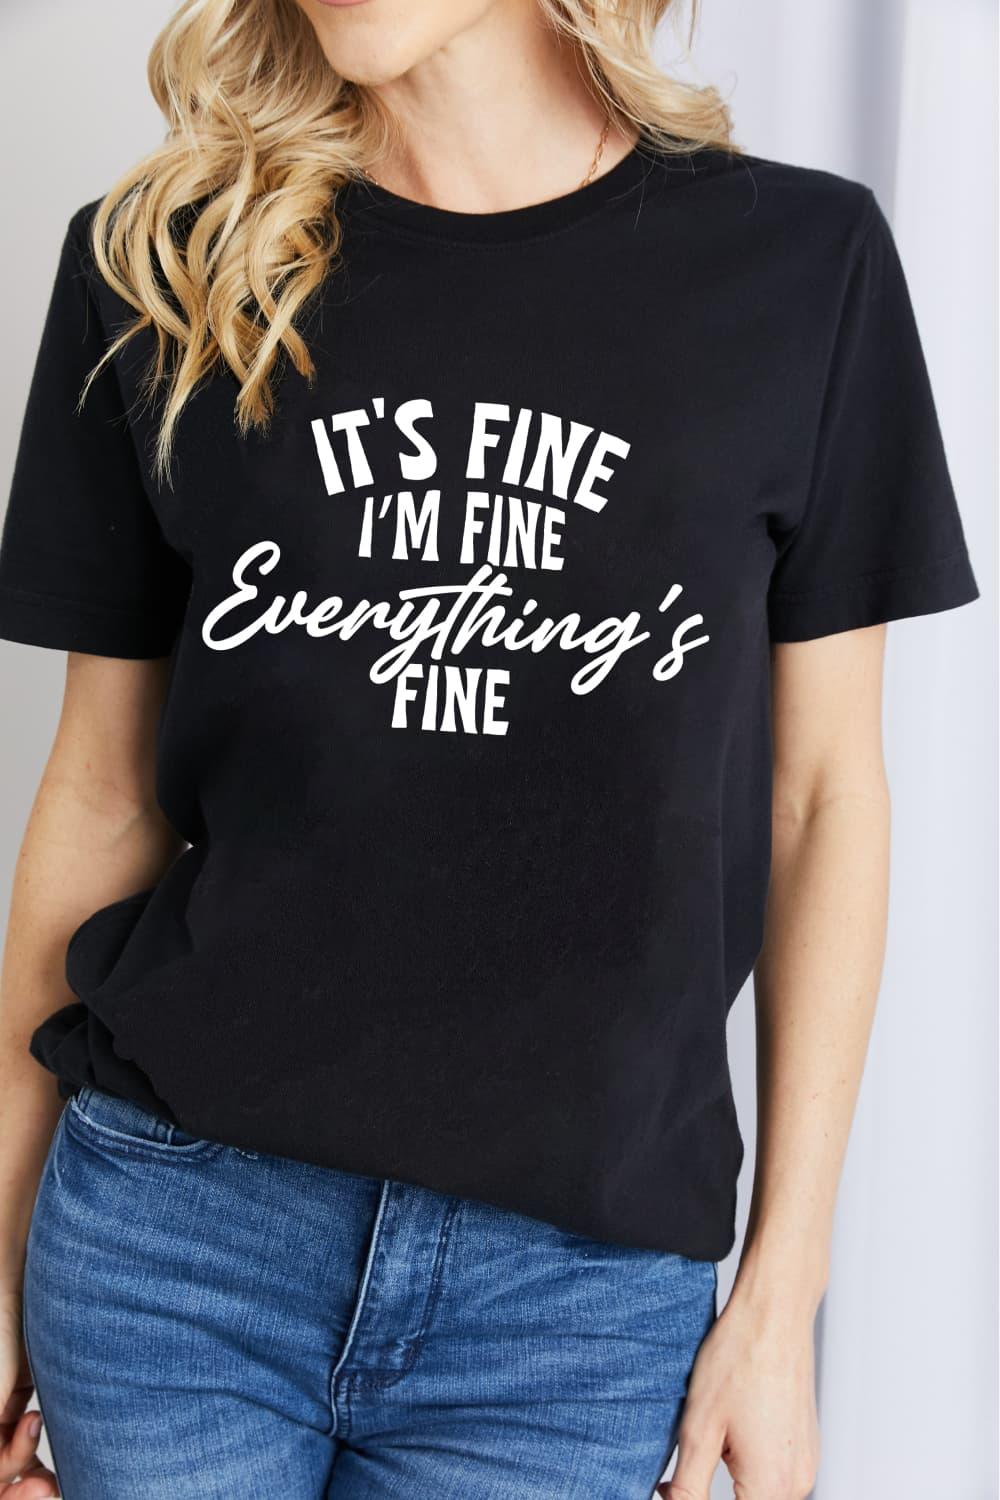 IT'S FINE I'M FINE EVERYTHING'S FINE Graphic Cotton T-Shirt - Lab Fashion, Home & Health